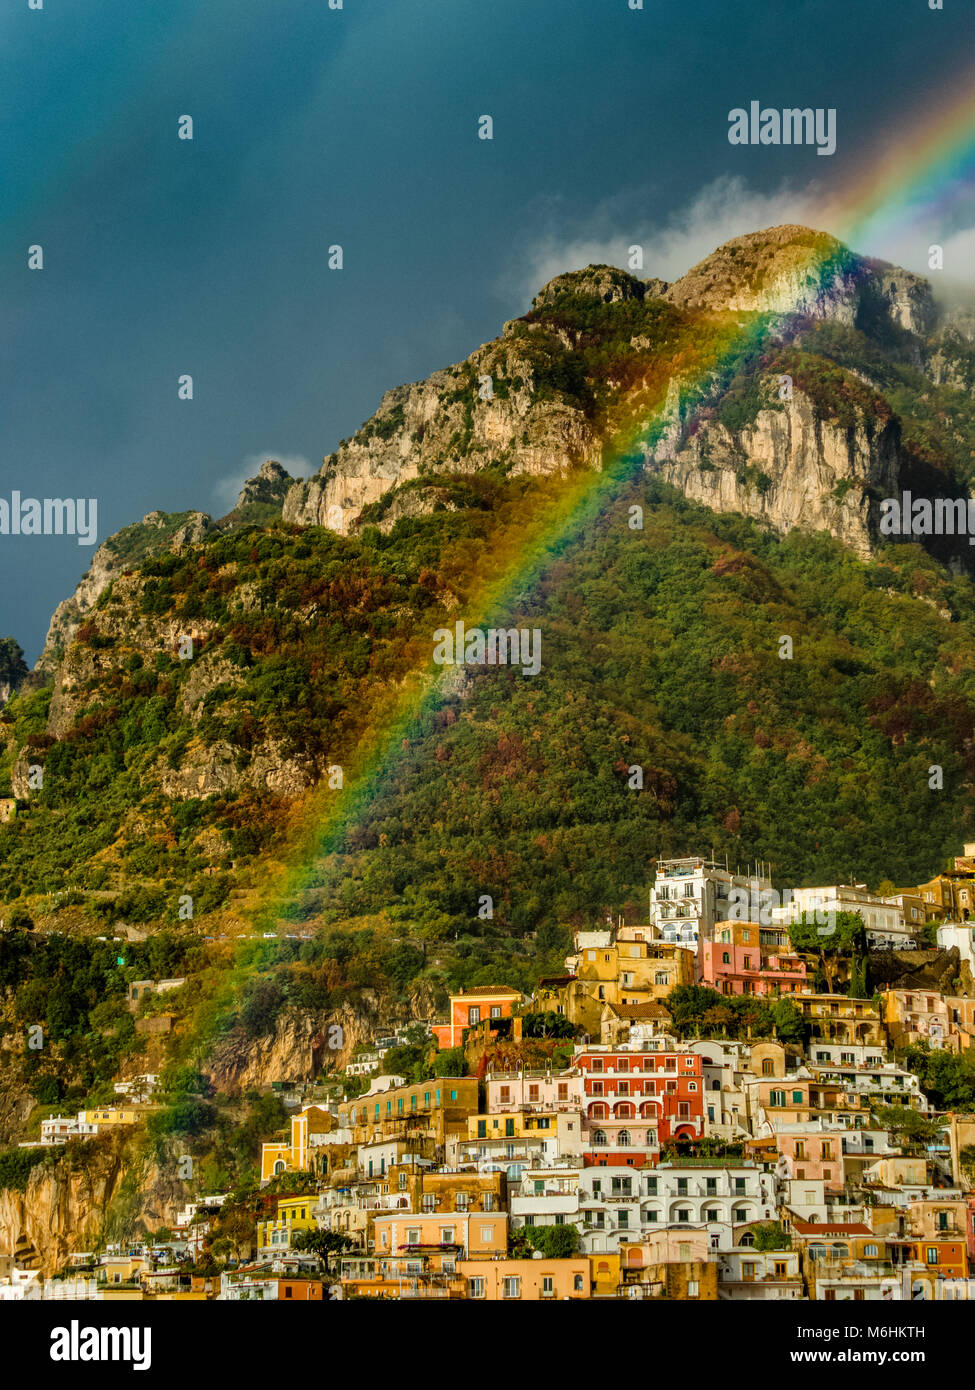 Town of Positano on Amalfi coast, Italy Stock Photo